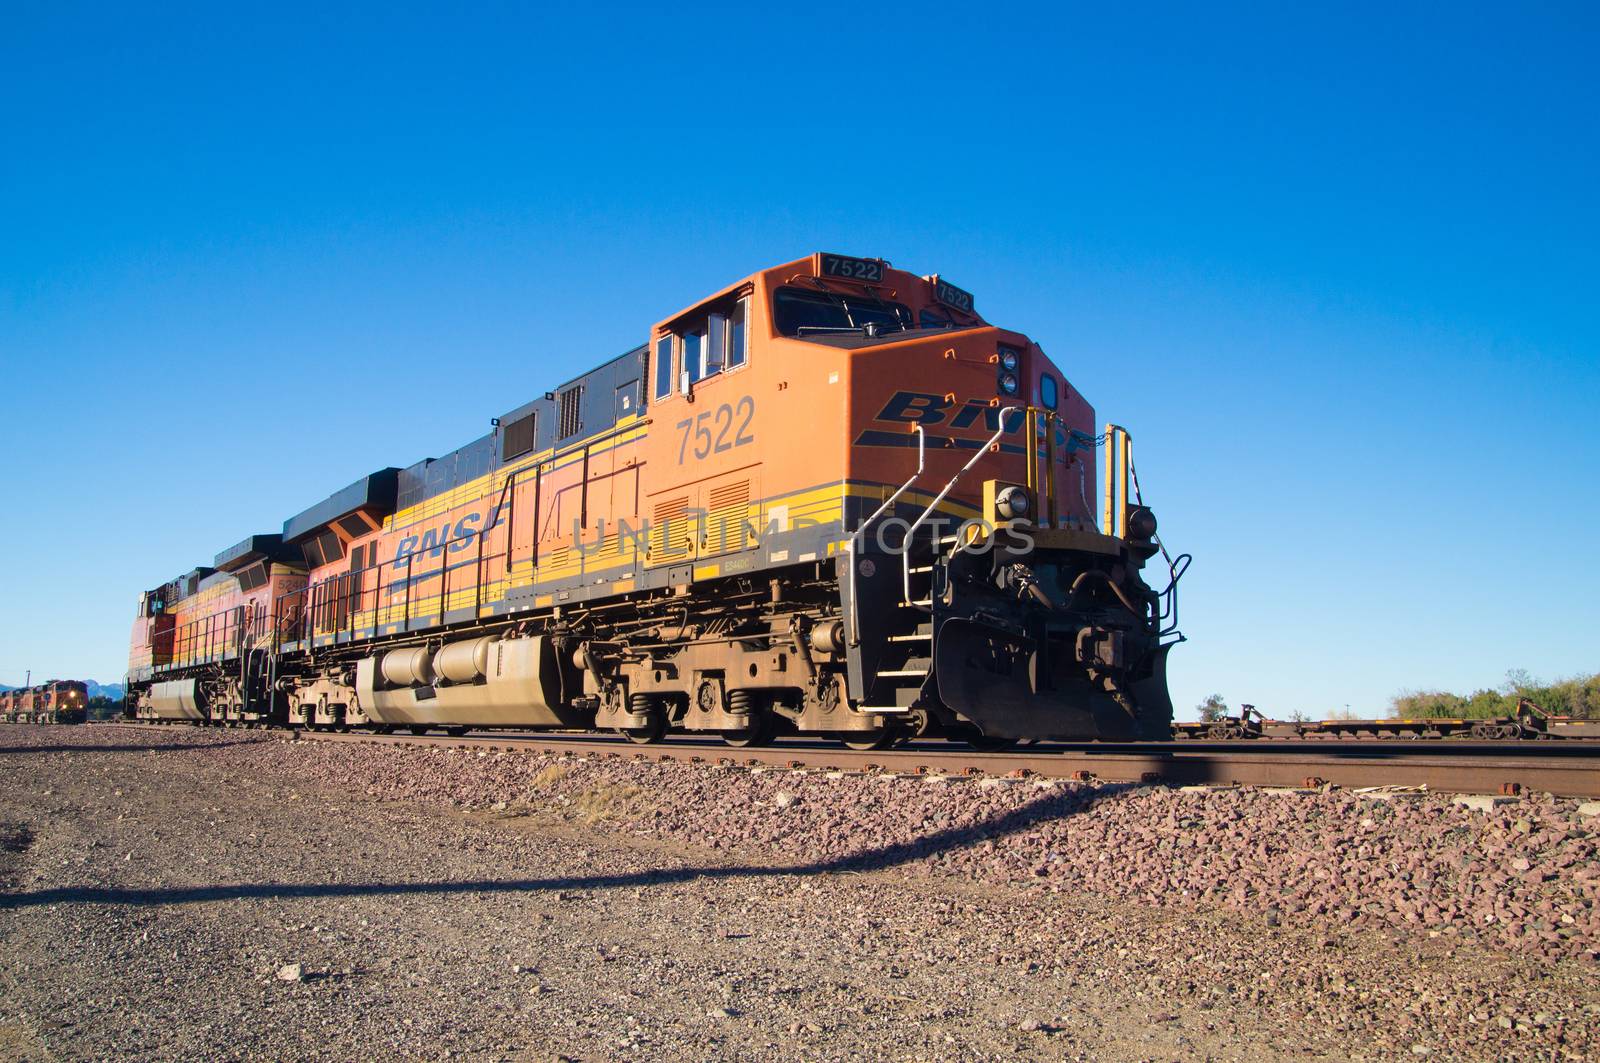 Distinctive orange and yellow Burlington Northern Santa Fe Locomotive freight train No. 7522 on the tracks at the town of Needles, California. Photo taken on February 5 2013.